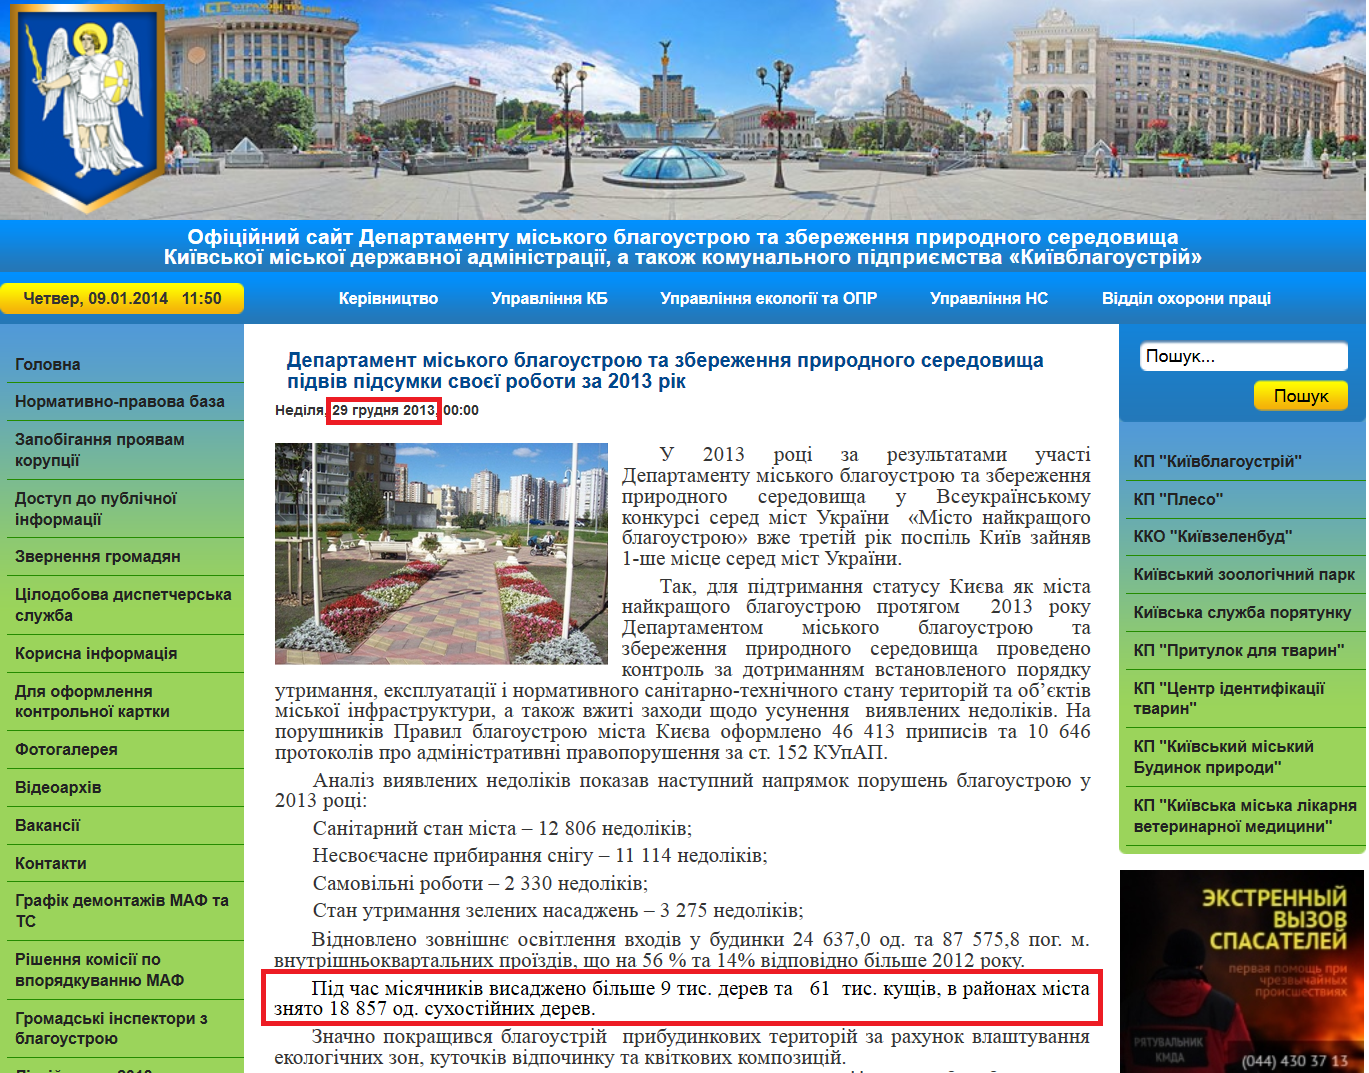 http://www.gukbm.kiev.ua/index.php?option=com_content&view=article&id=1207:-2013-